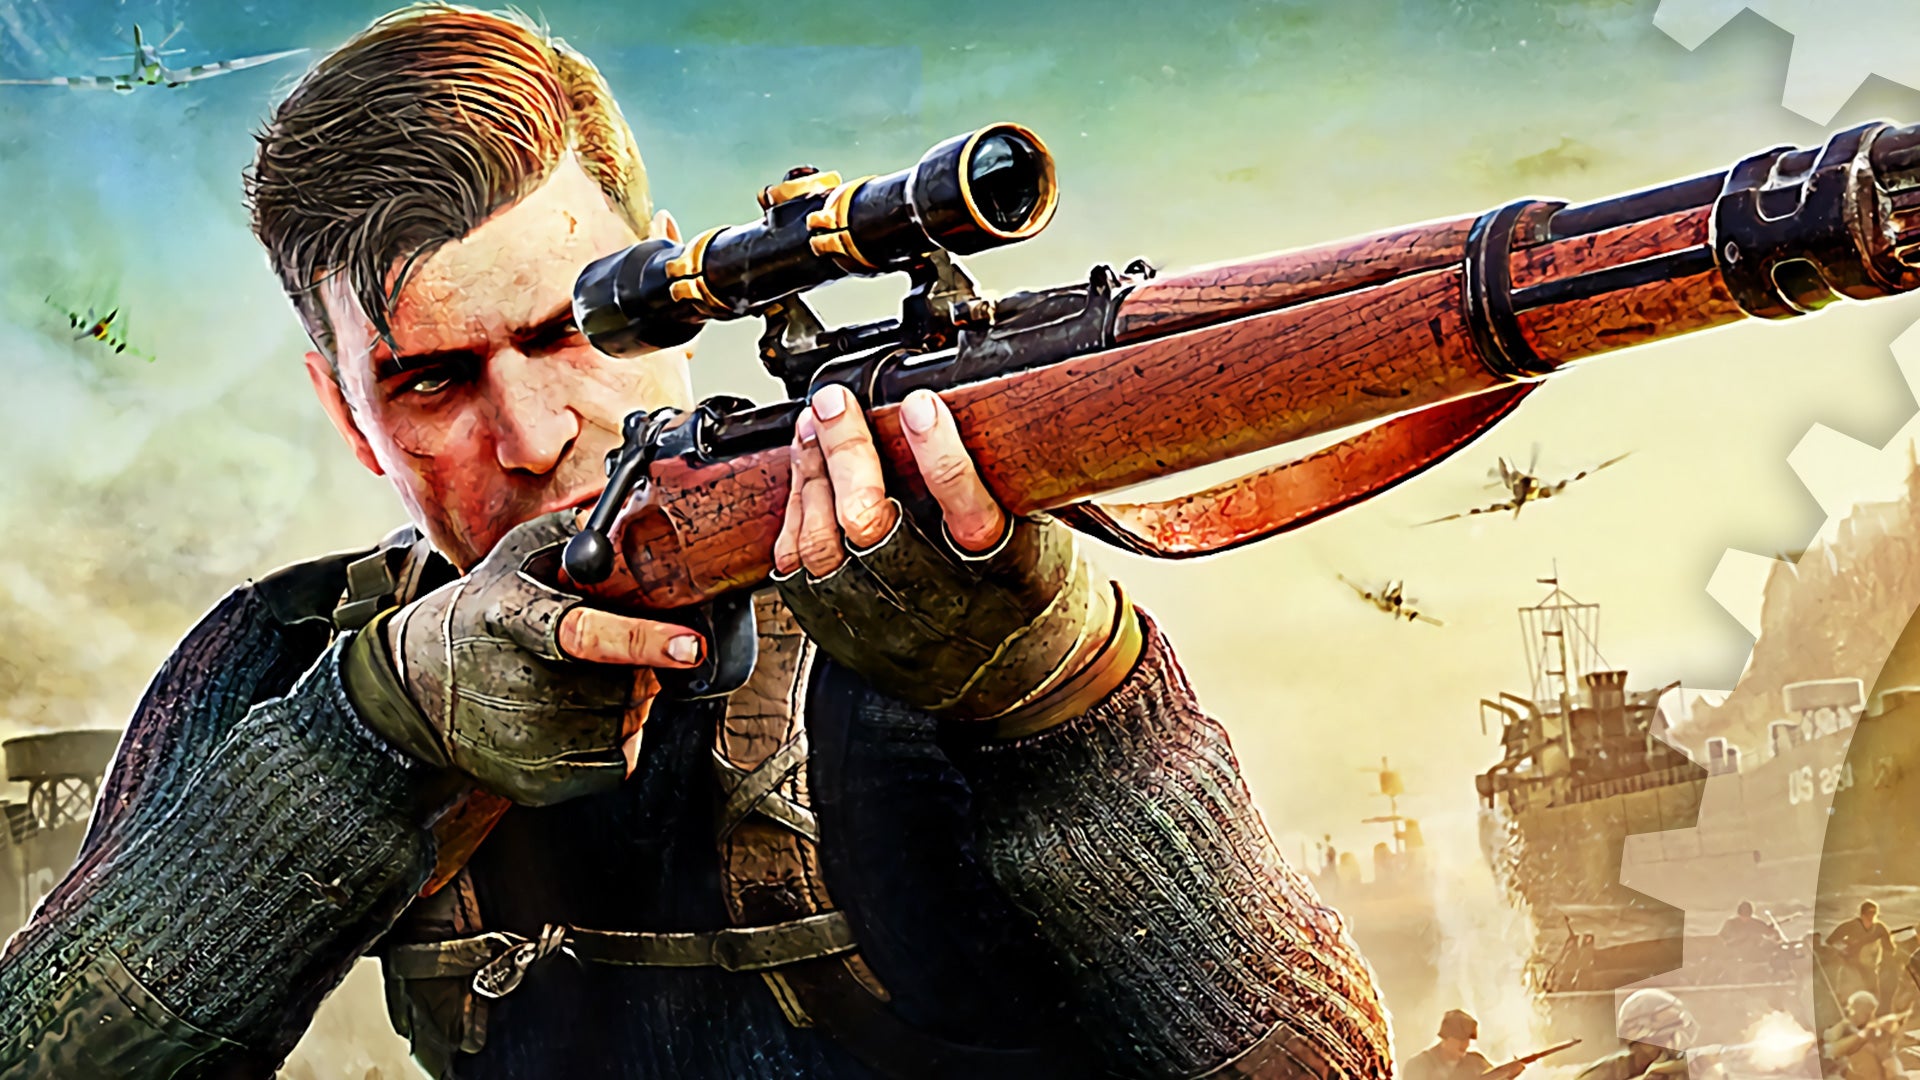 Games of 2022 Sniper Elite 5 had the best art Eurogamer